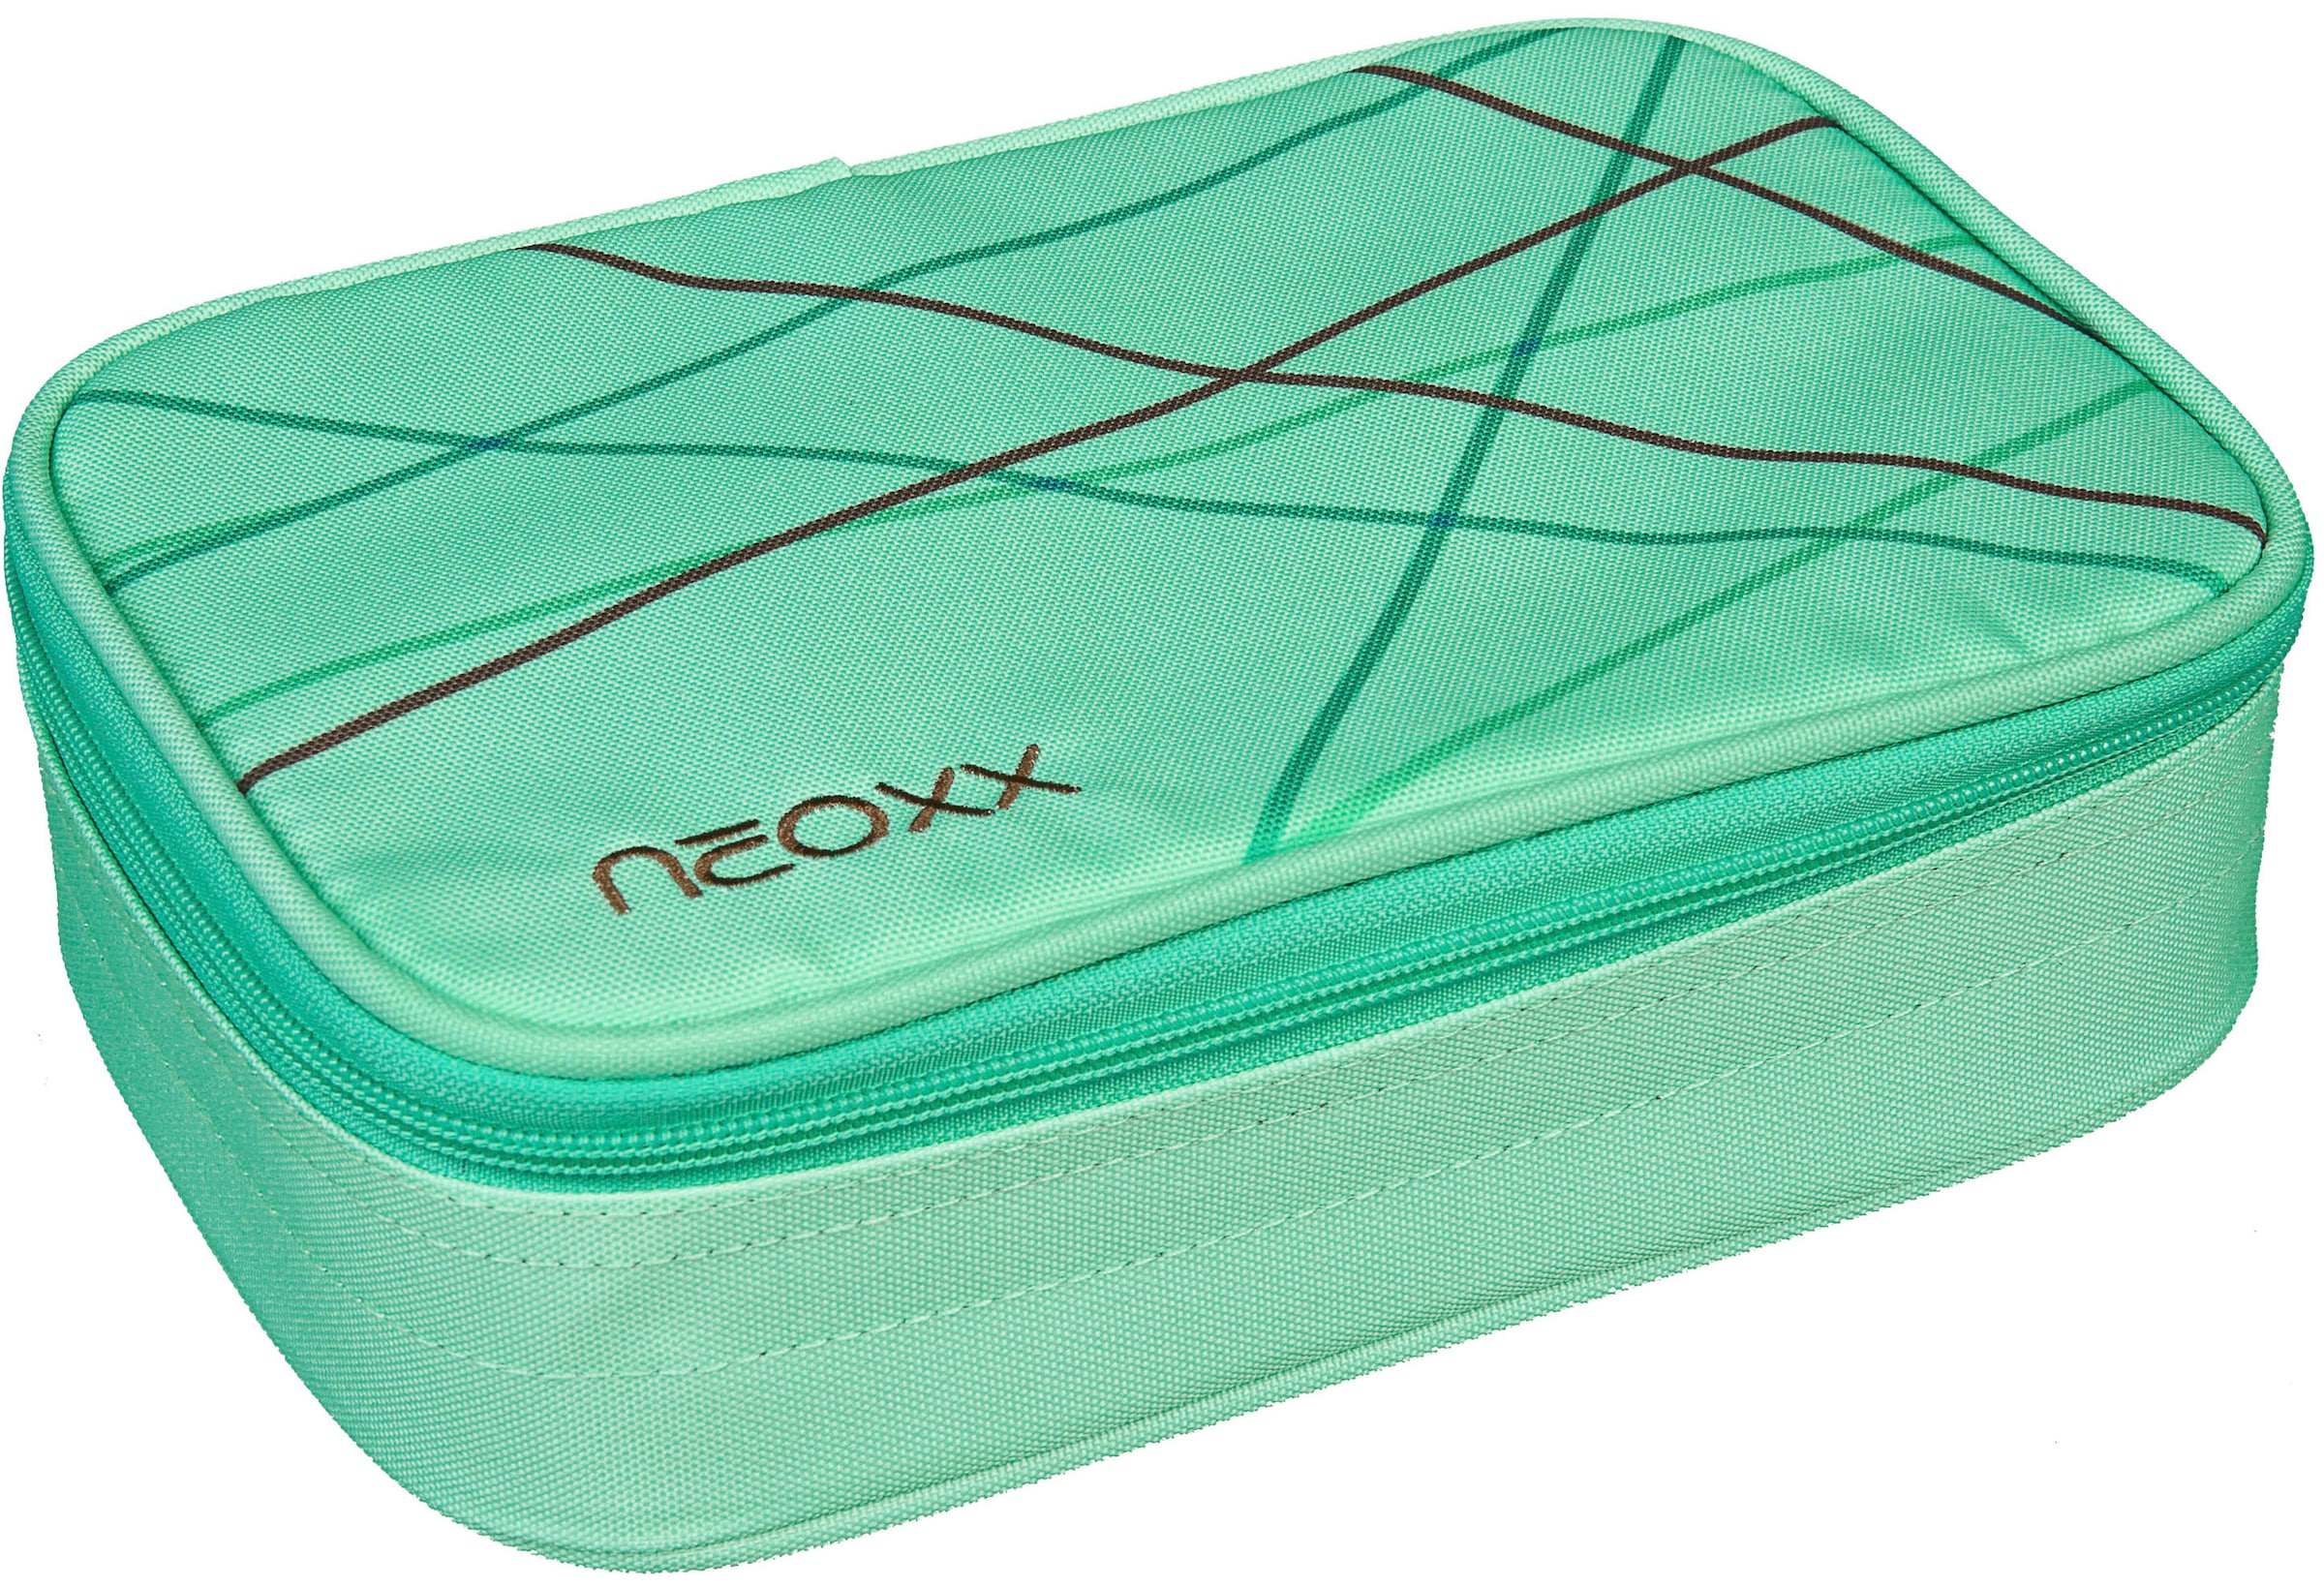 Modische neoxx Schreibgeräteetui »Schlamperbox, to teilweise Material aus Dunk, versandkostenfrei be«, recyceltem Mint shoppen